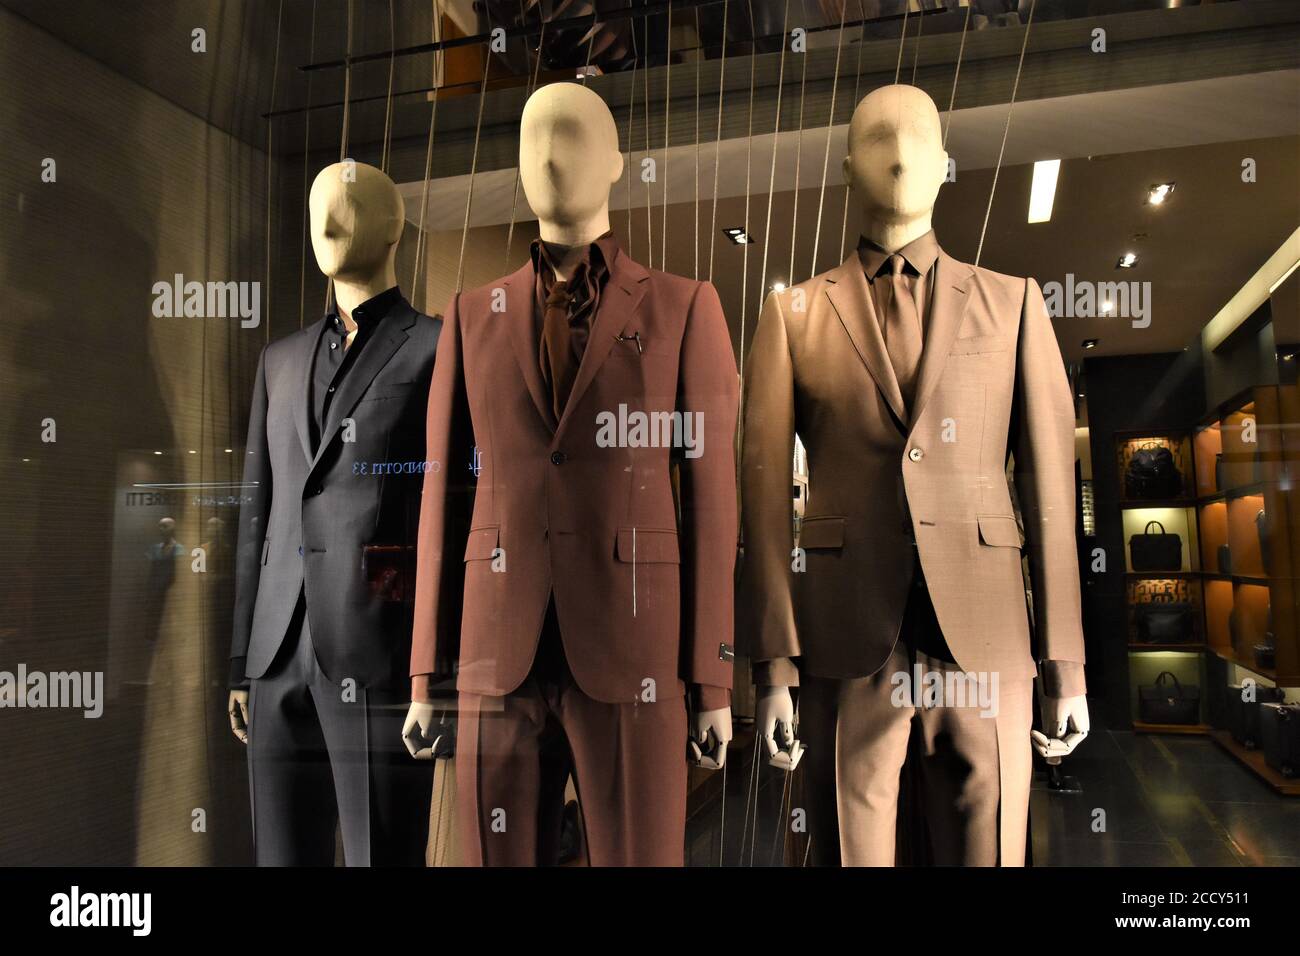 CLOTHES ON DISPLAY AT ERMENEGILDO ZEGNA BOUTIQUE IN CONDOTTI STREET Photo - Alamy